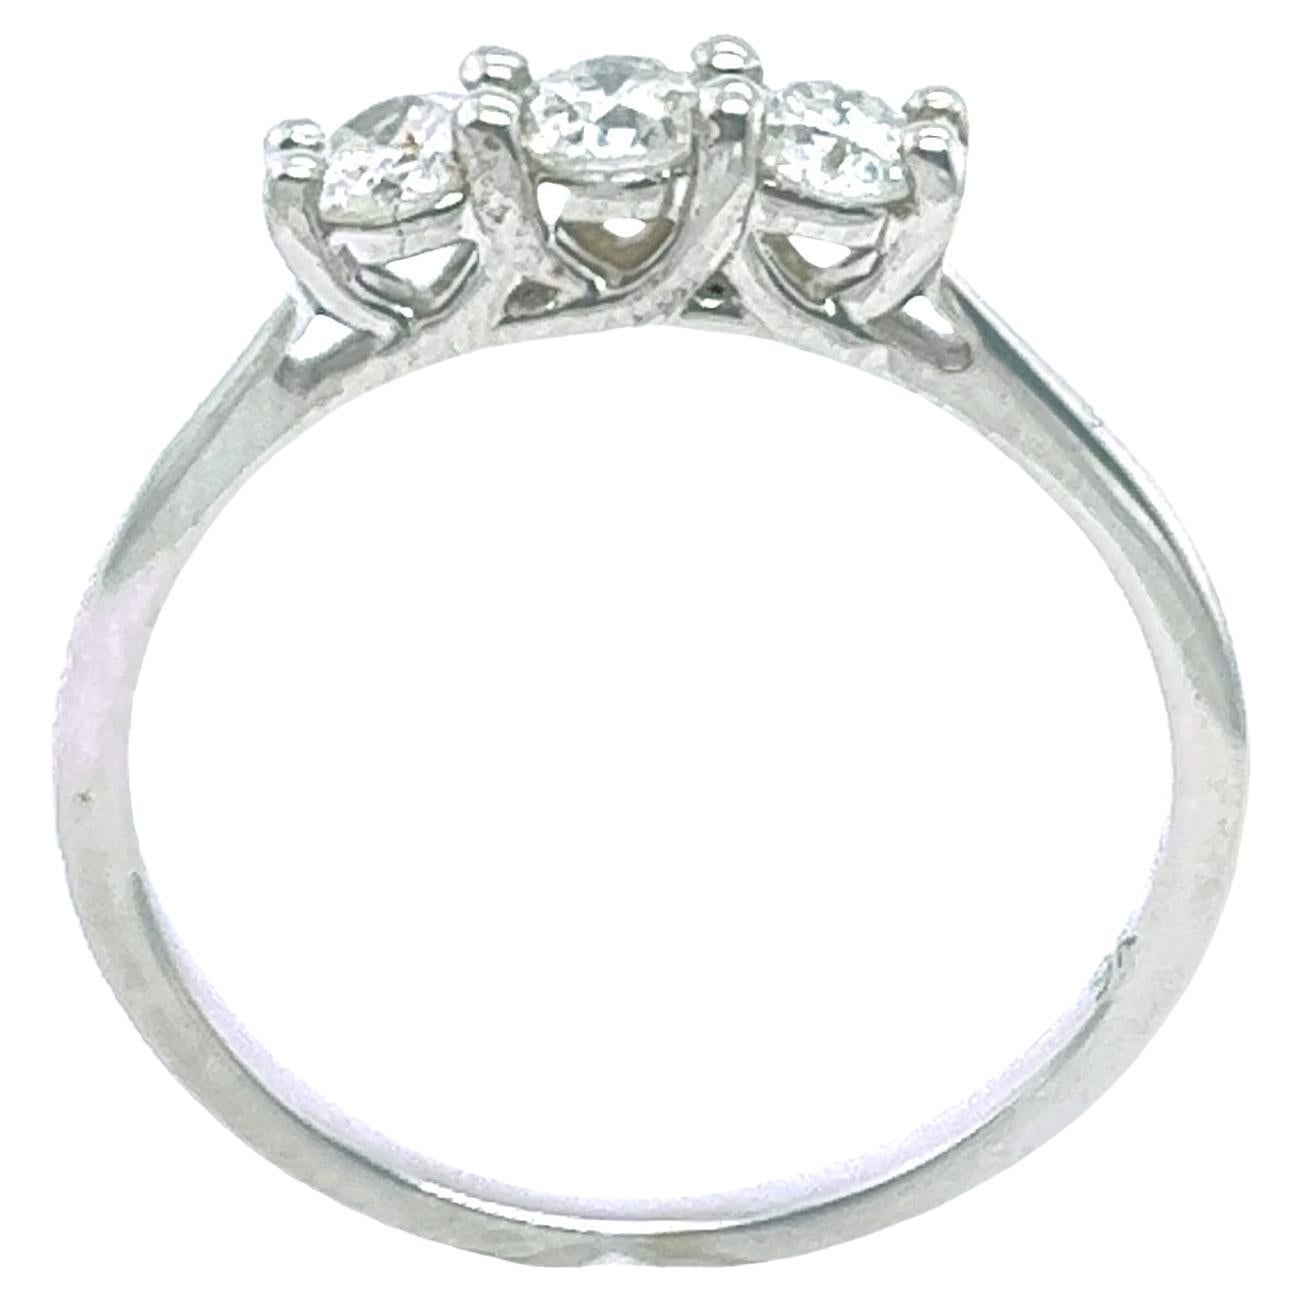 9ct White Gold 3-Stone Diamond Ring Set With 0.50ct Natural Round Diamonds